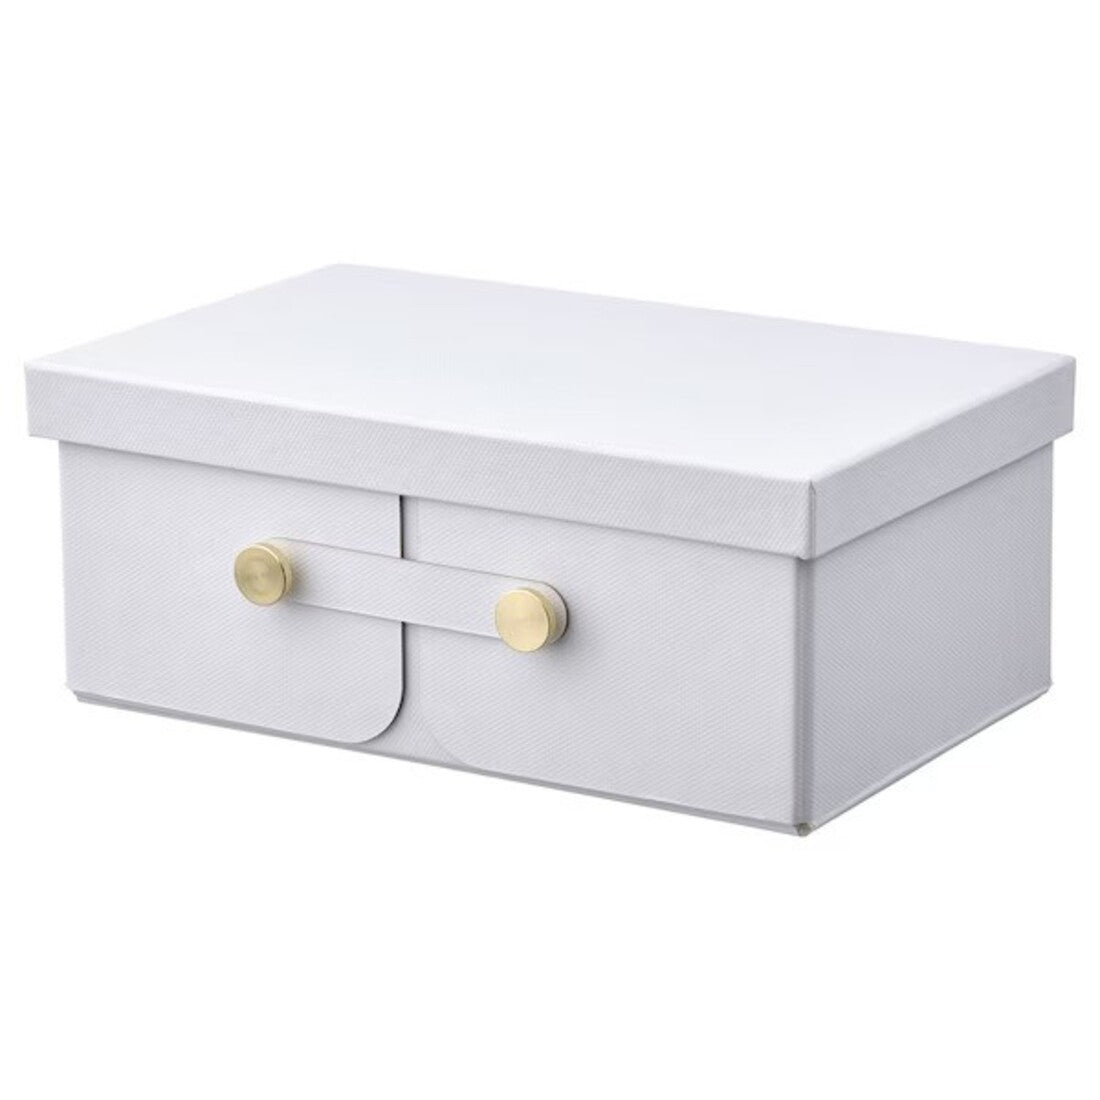 IKEA SPINNROCK Box with Compartments Organizer-25x16x10cm